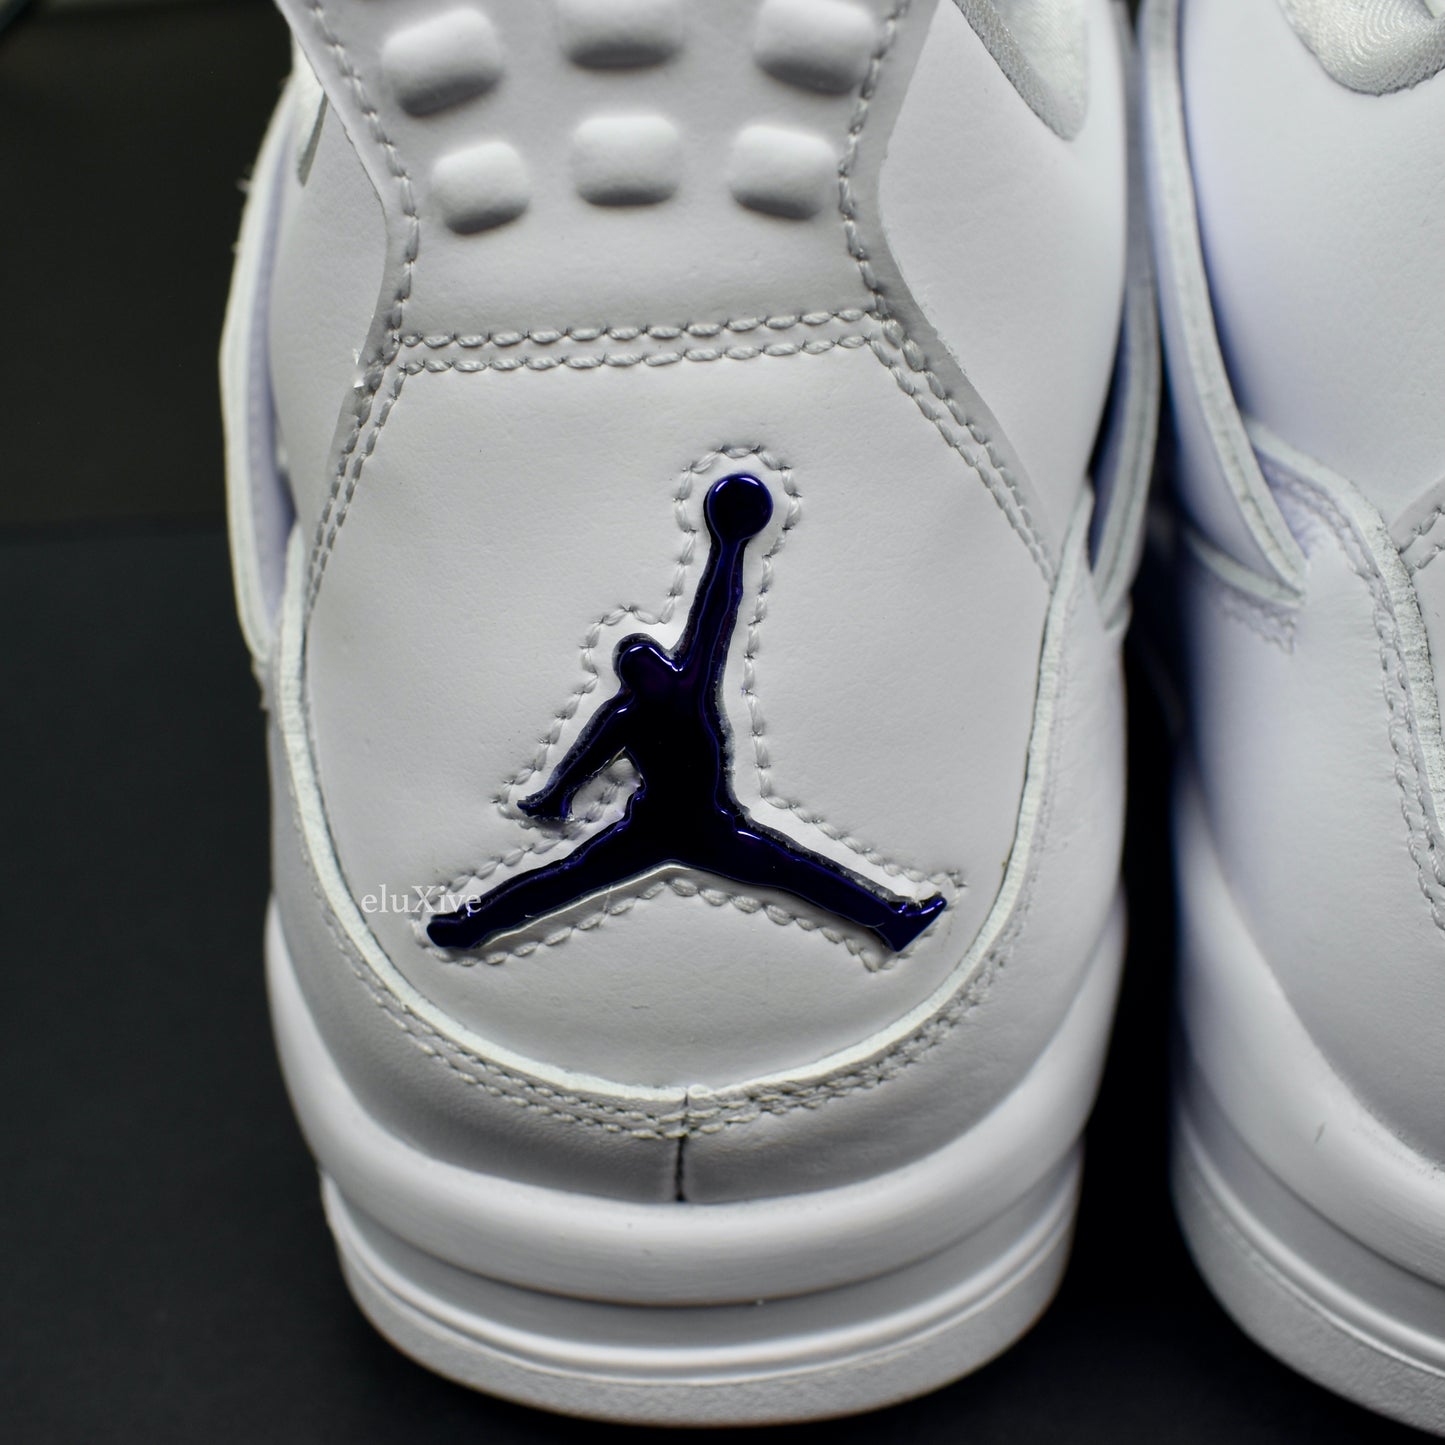 Nike - Air Jordan 4 Retro White/Court Purple